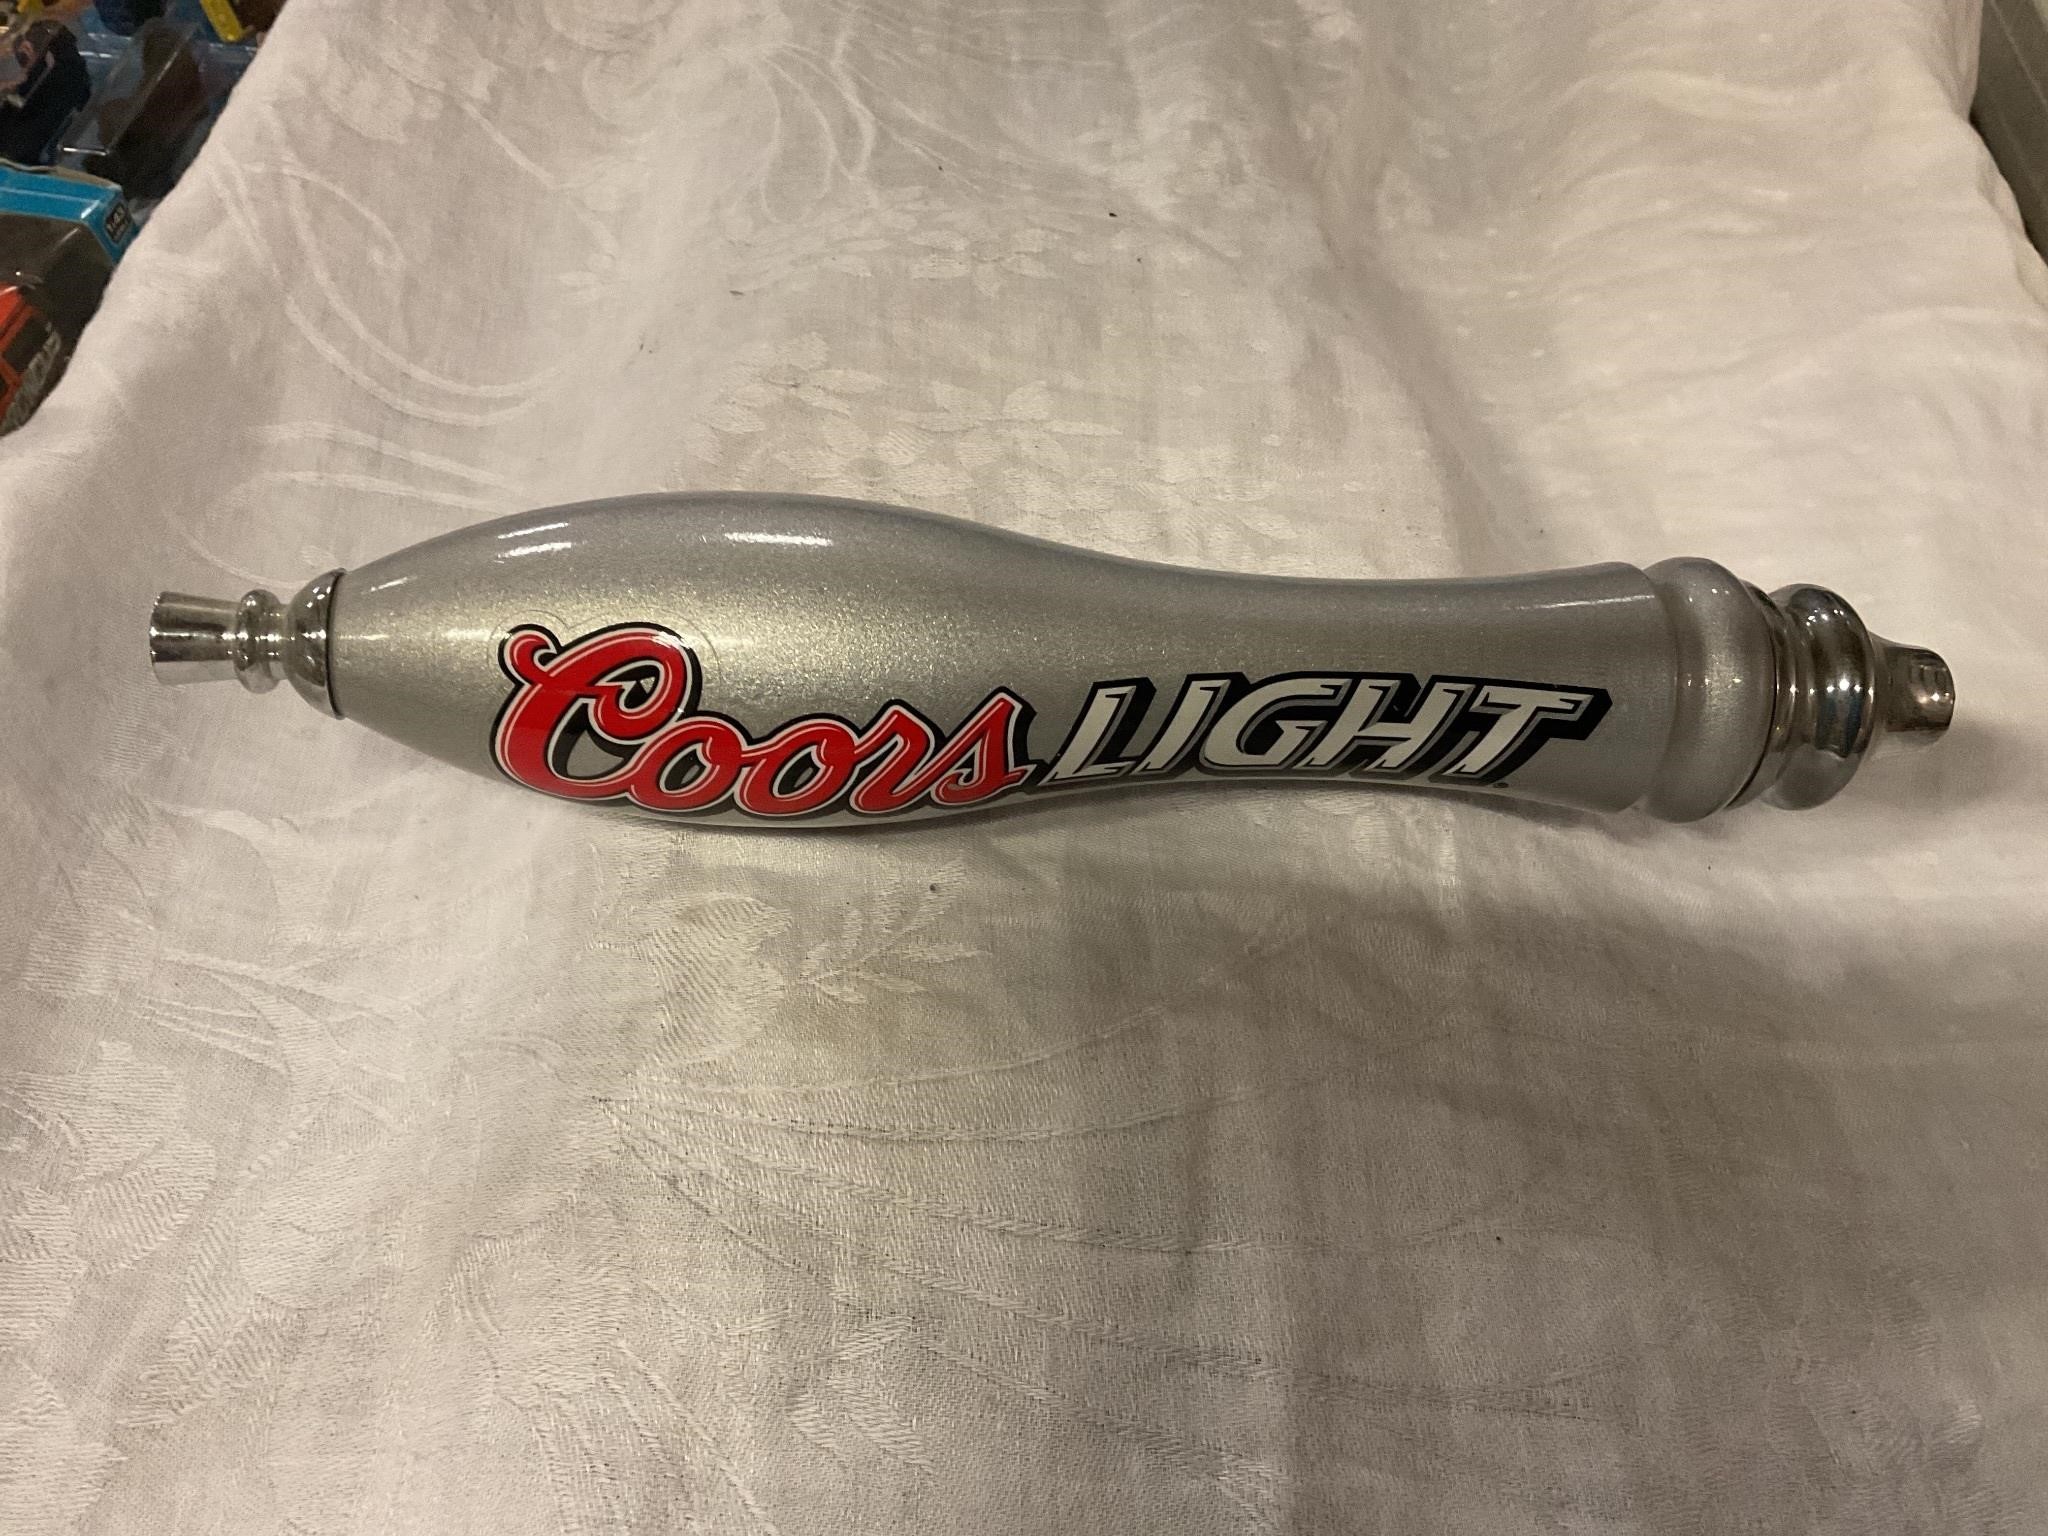 Coors light beer tapper